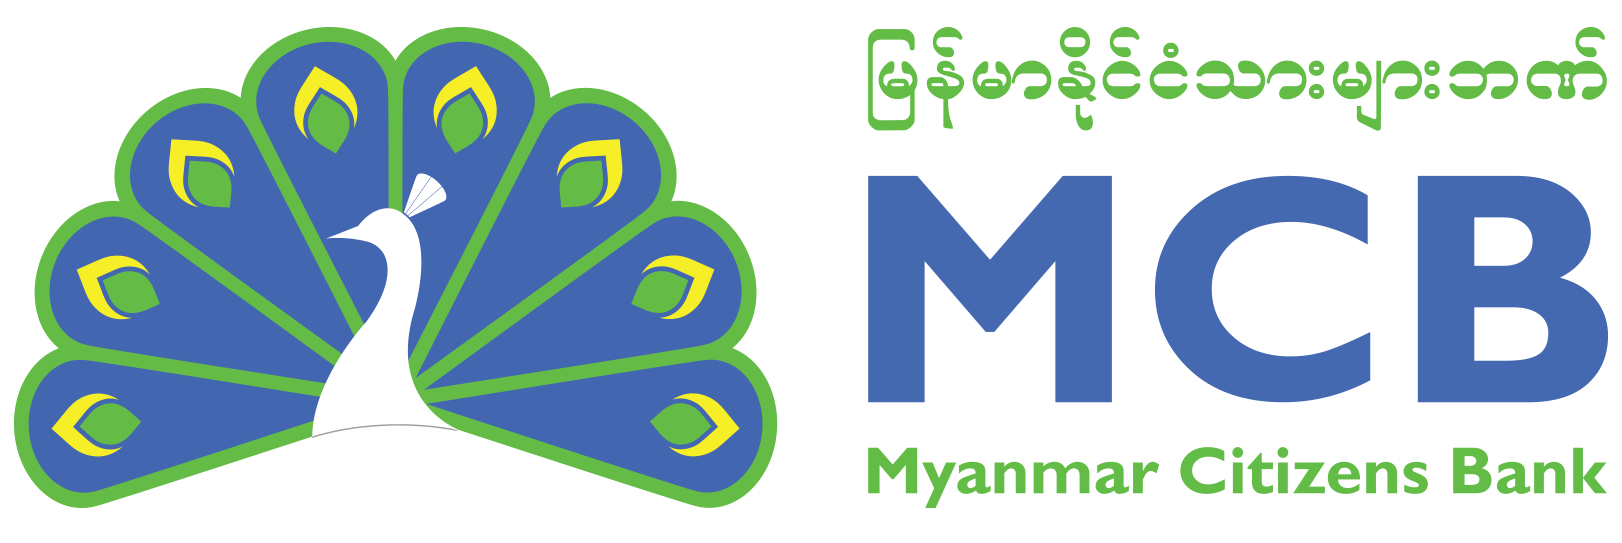 Citizens Bank Logo - MCB - Myanmar Citizens Bank